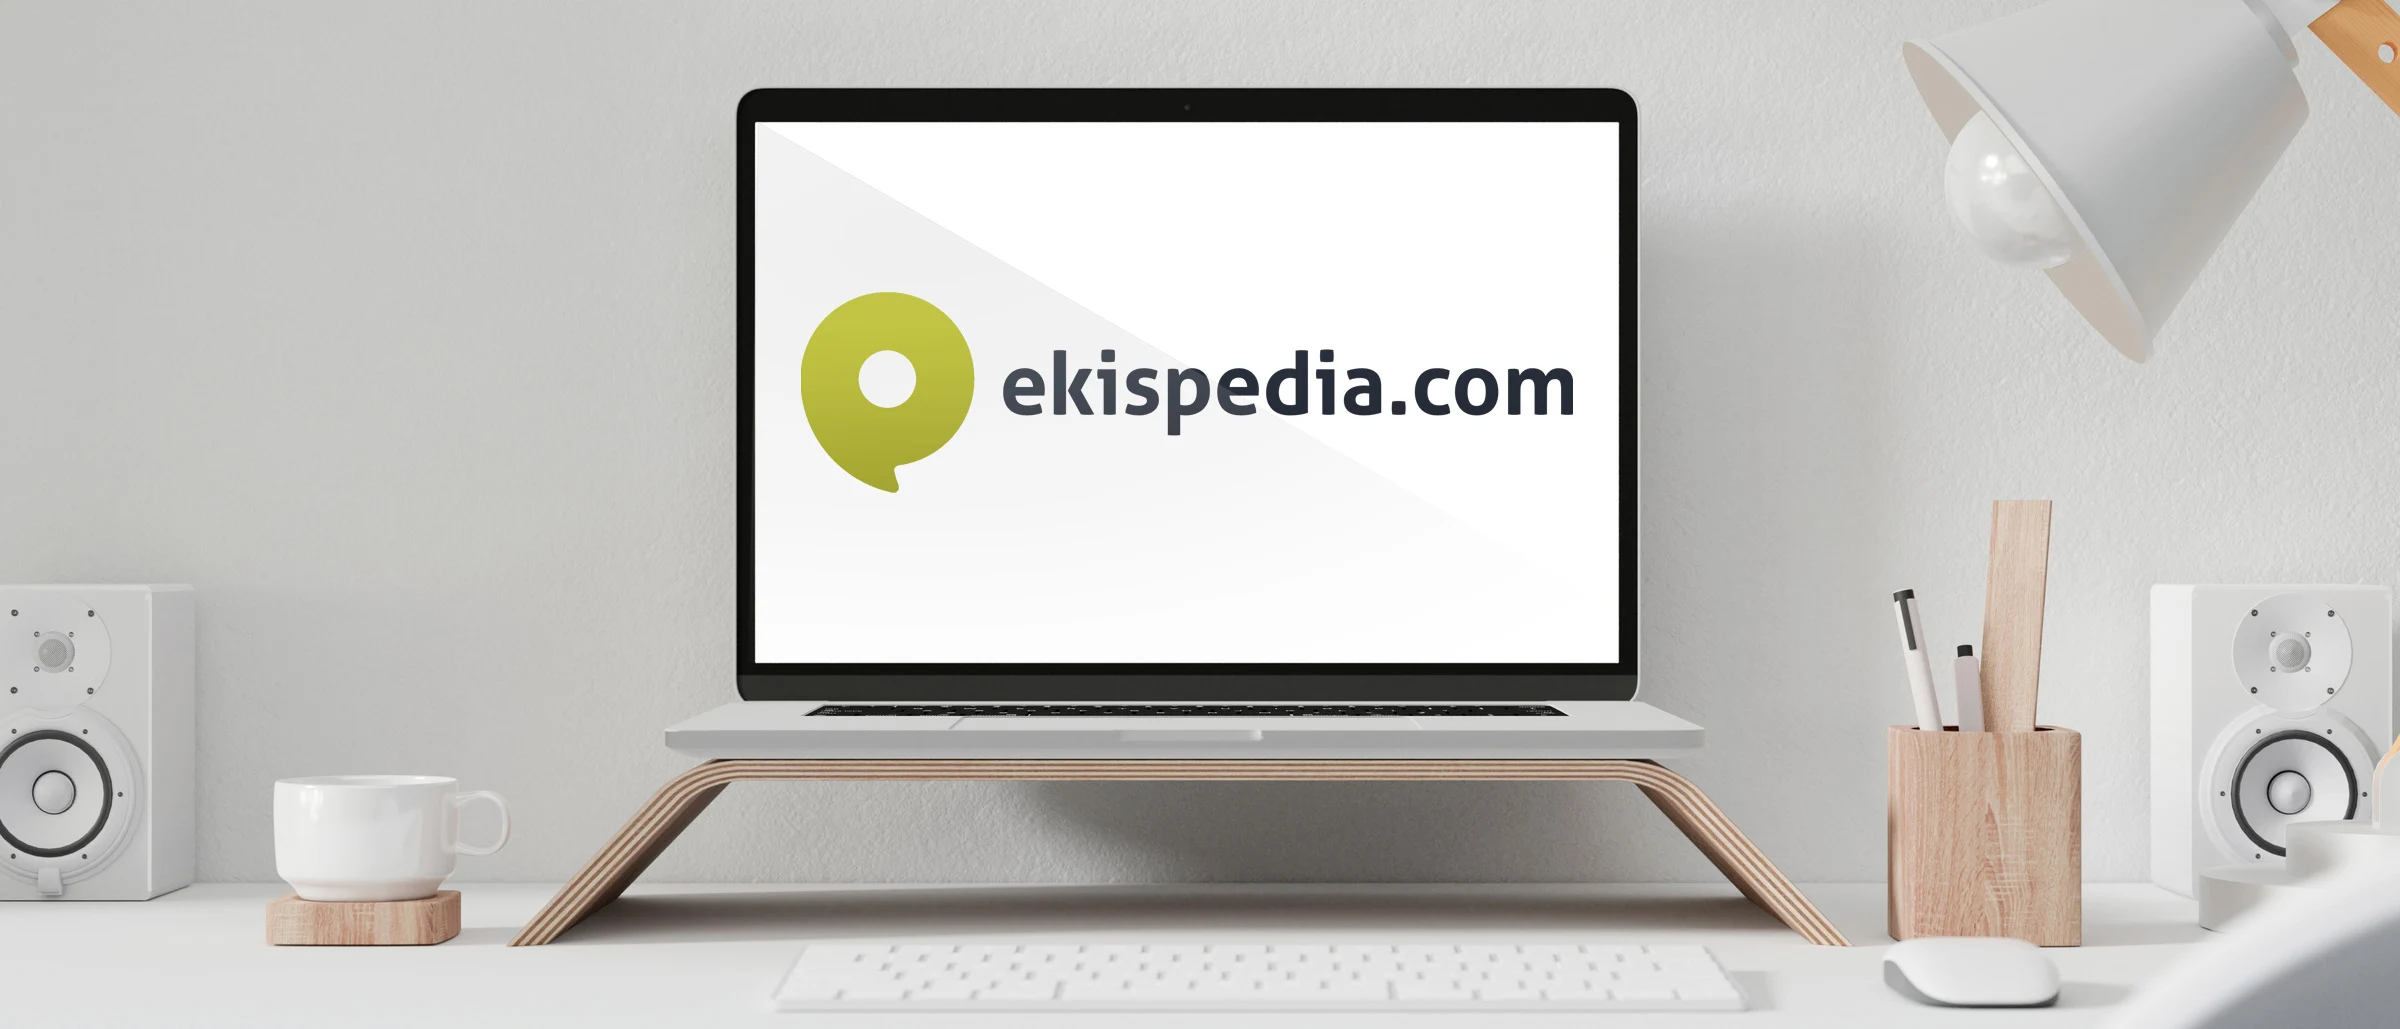 [Telah Hadir] EkisPedia.com: Media Literasi Ekonomi Islam